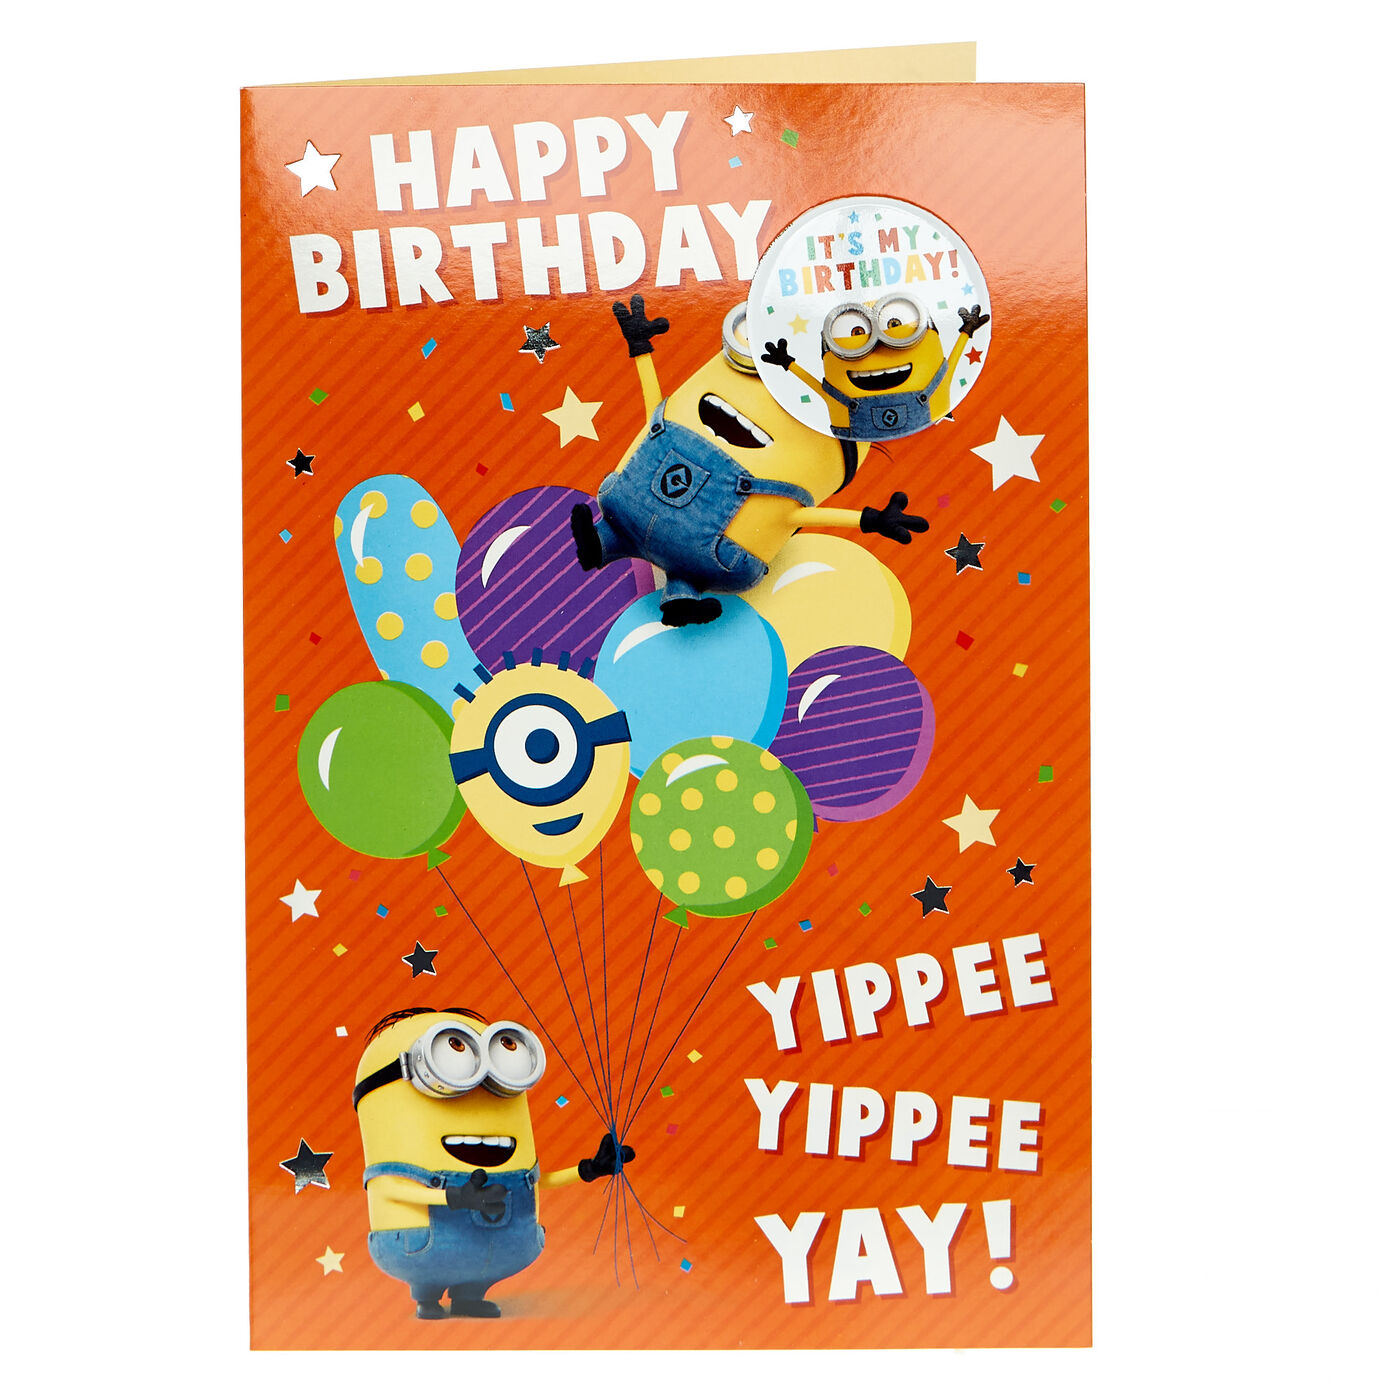 It's a Minion Birthday Card!